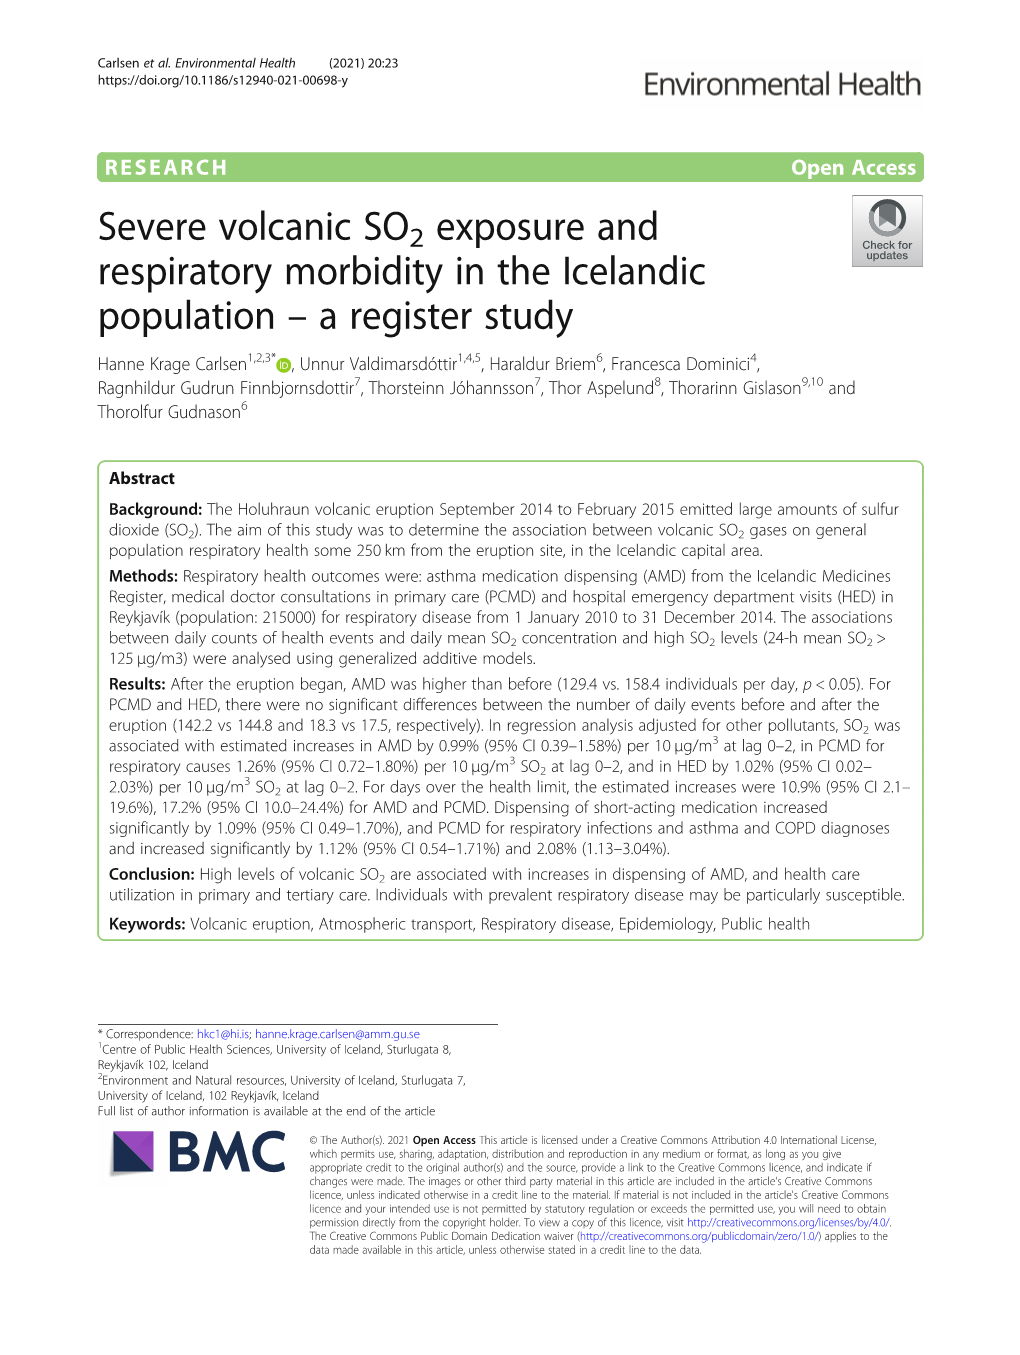 Severe Volcanic SO2 Exposure and Respiratory